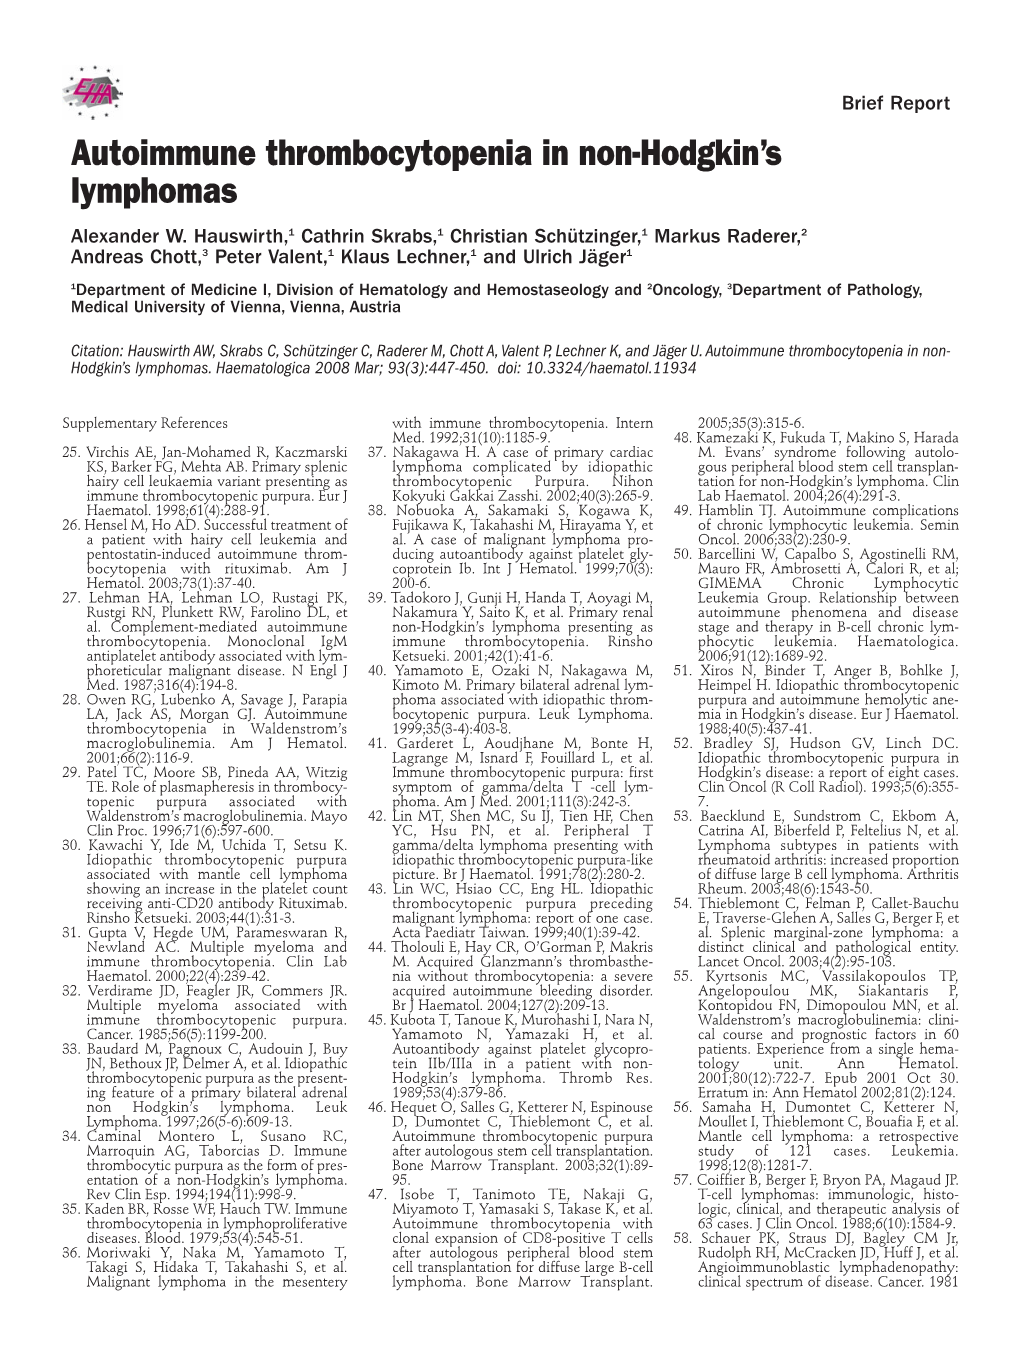 Autoimmune Thrombocytopenia in Non-Hodgkin's Lymphomas